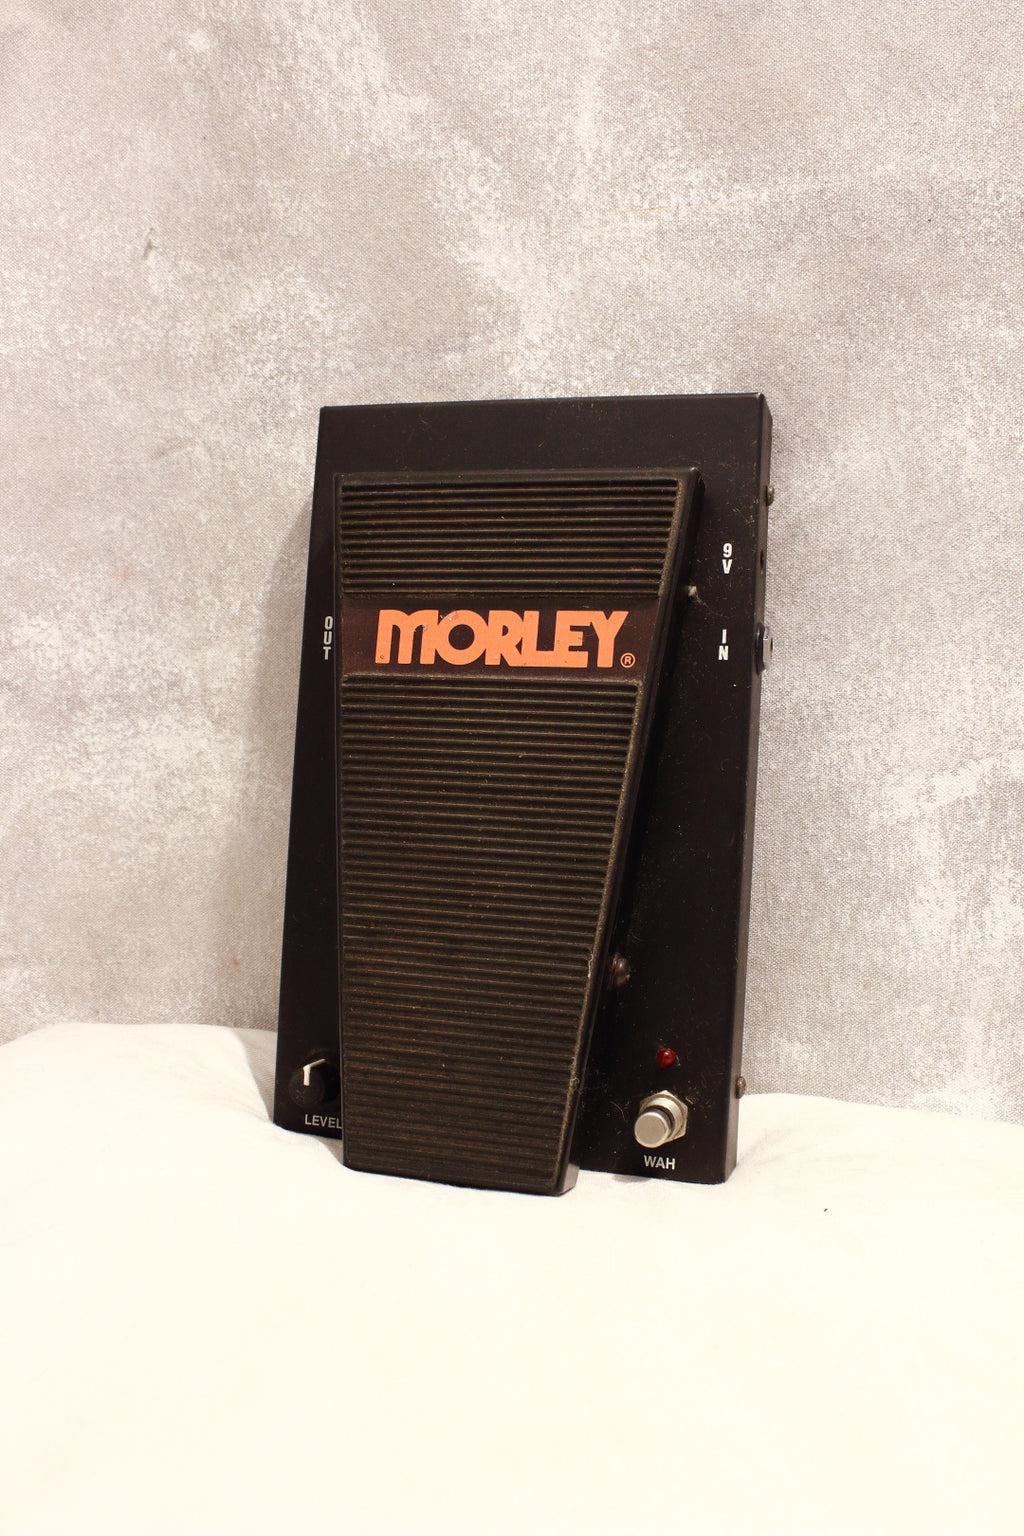 Morley Pro Series Wah Volume Pedal